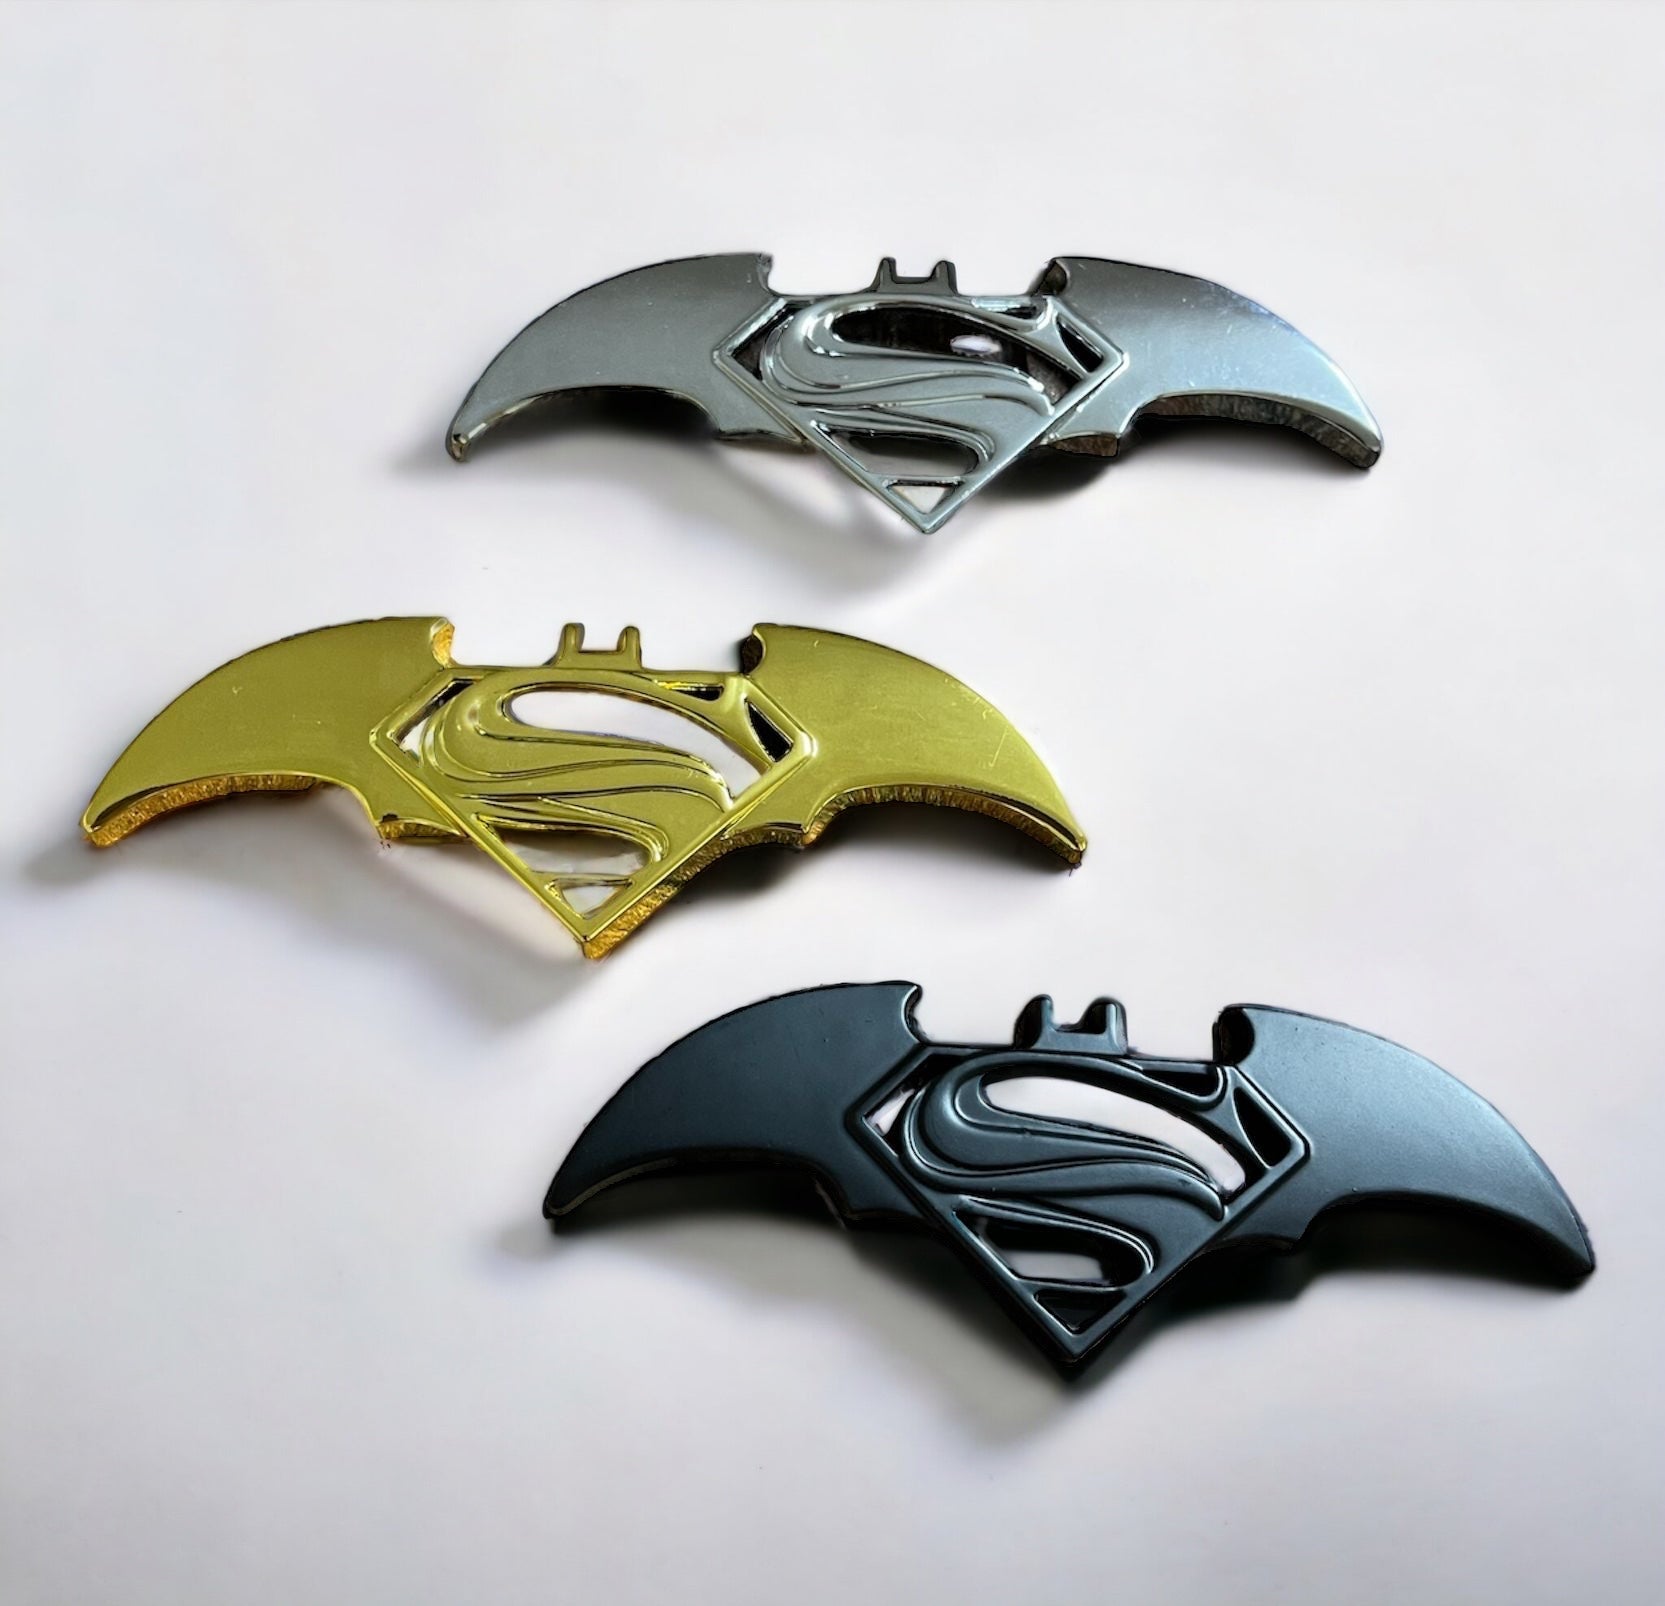 Superhero 3D Metal Emblem Sticker - Batman, Superman, Joker